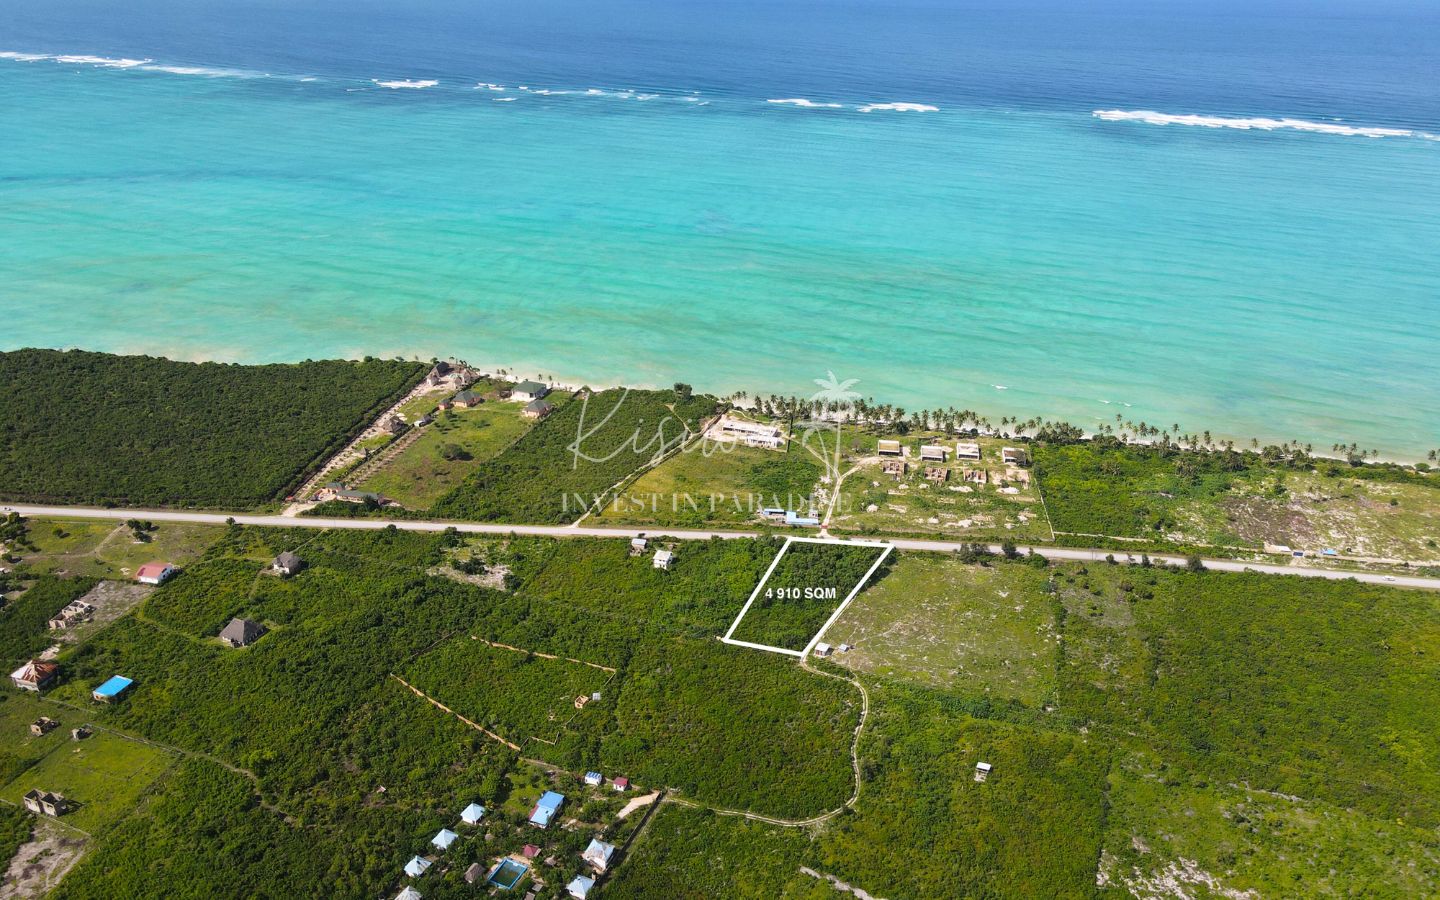 Land for sale Zanzibar Jambiani 4 910SQM